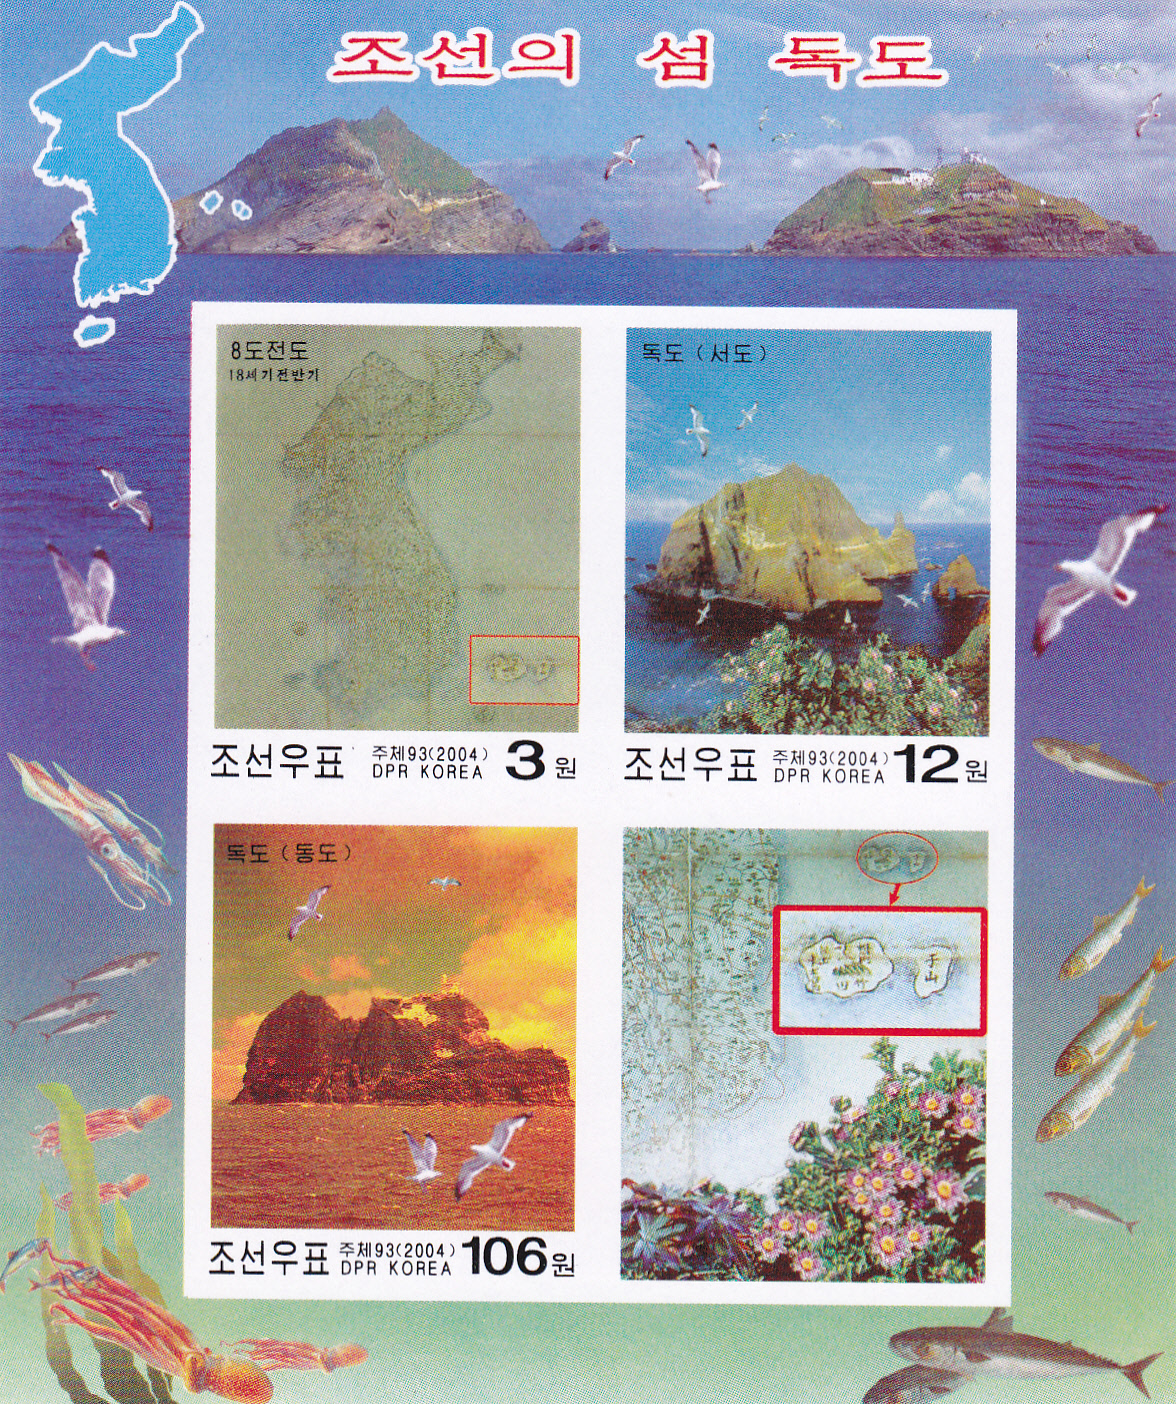 L4315, Korea Dokdo M/S Stamp, Dokdo Islands Map (Takeshima) 2004, Imperforation